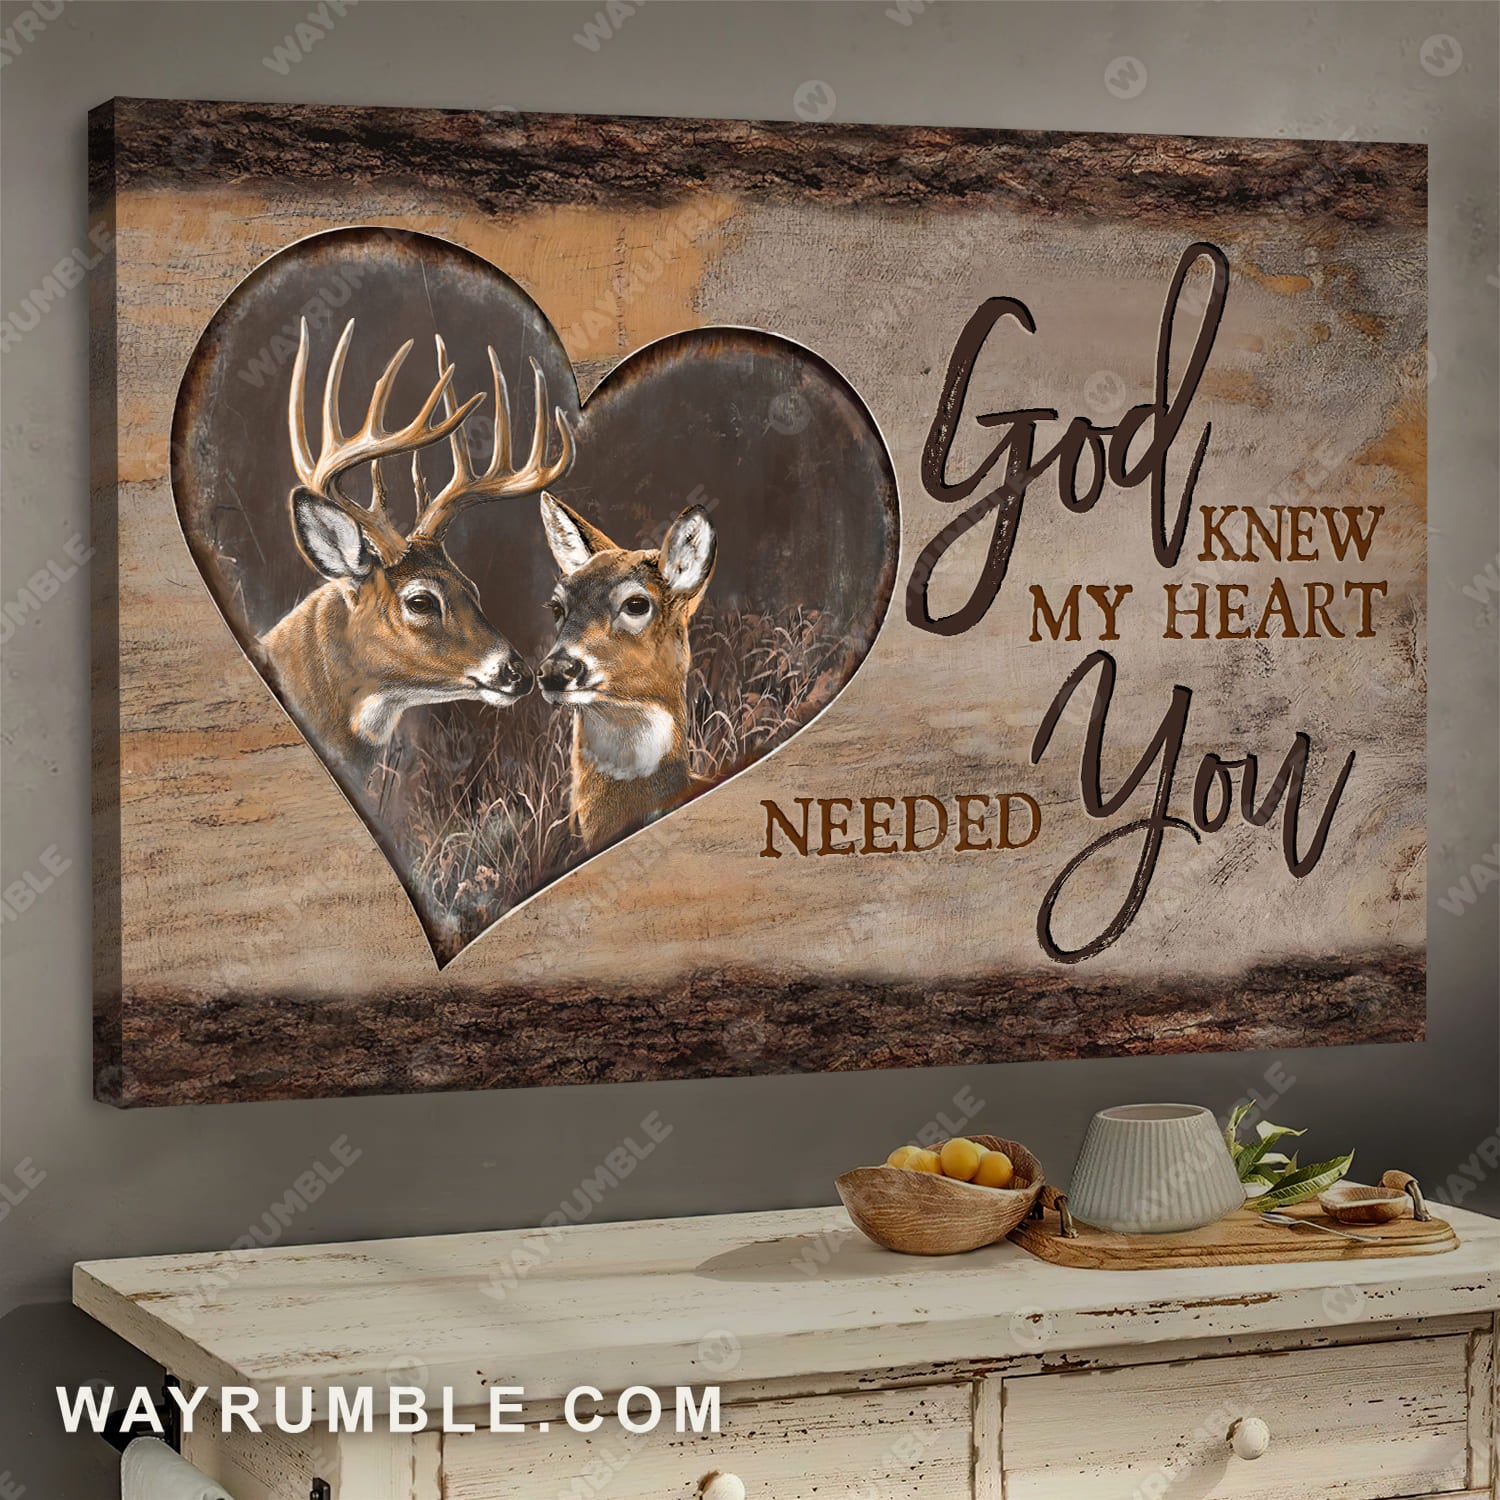 Deer drawing, Wooden heart, God knew my heart needed you - Jesus Landscape Canvas Prints, Wall Art